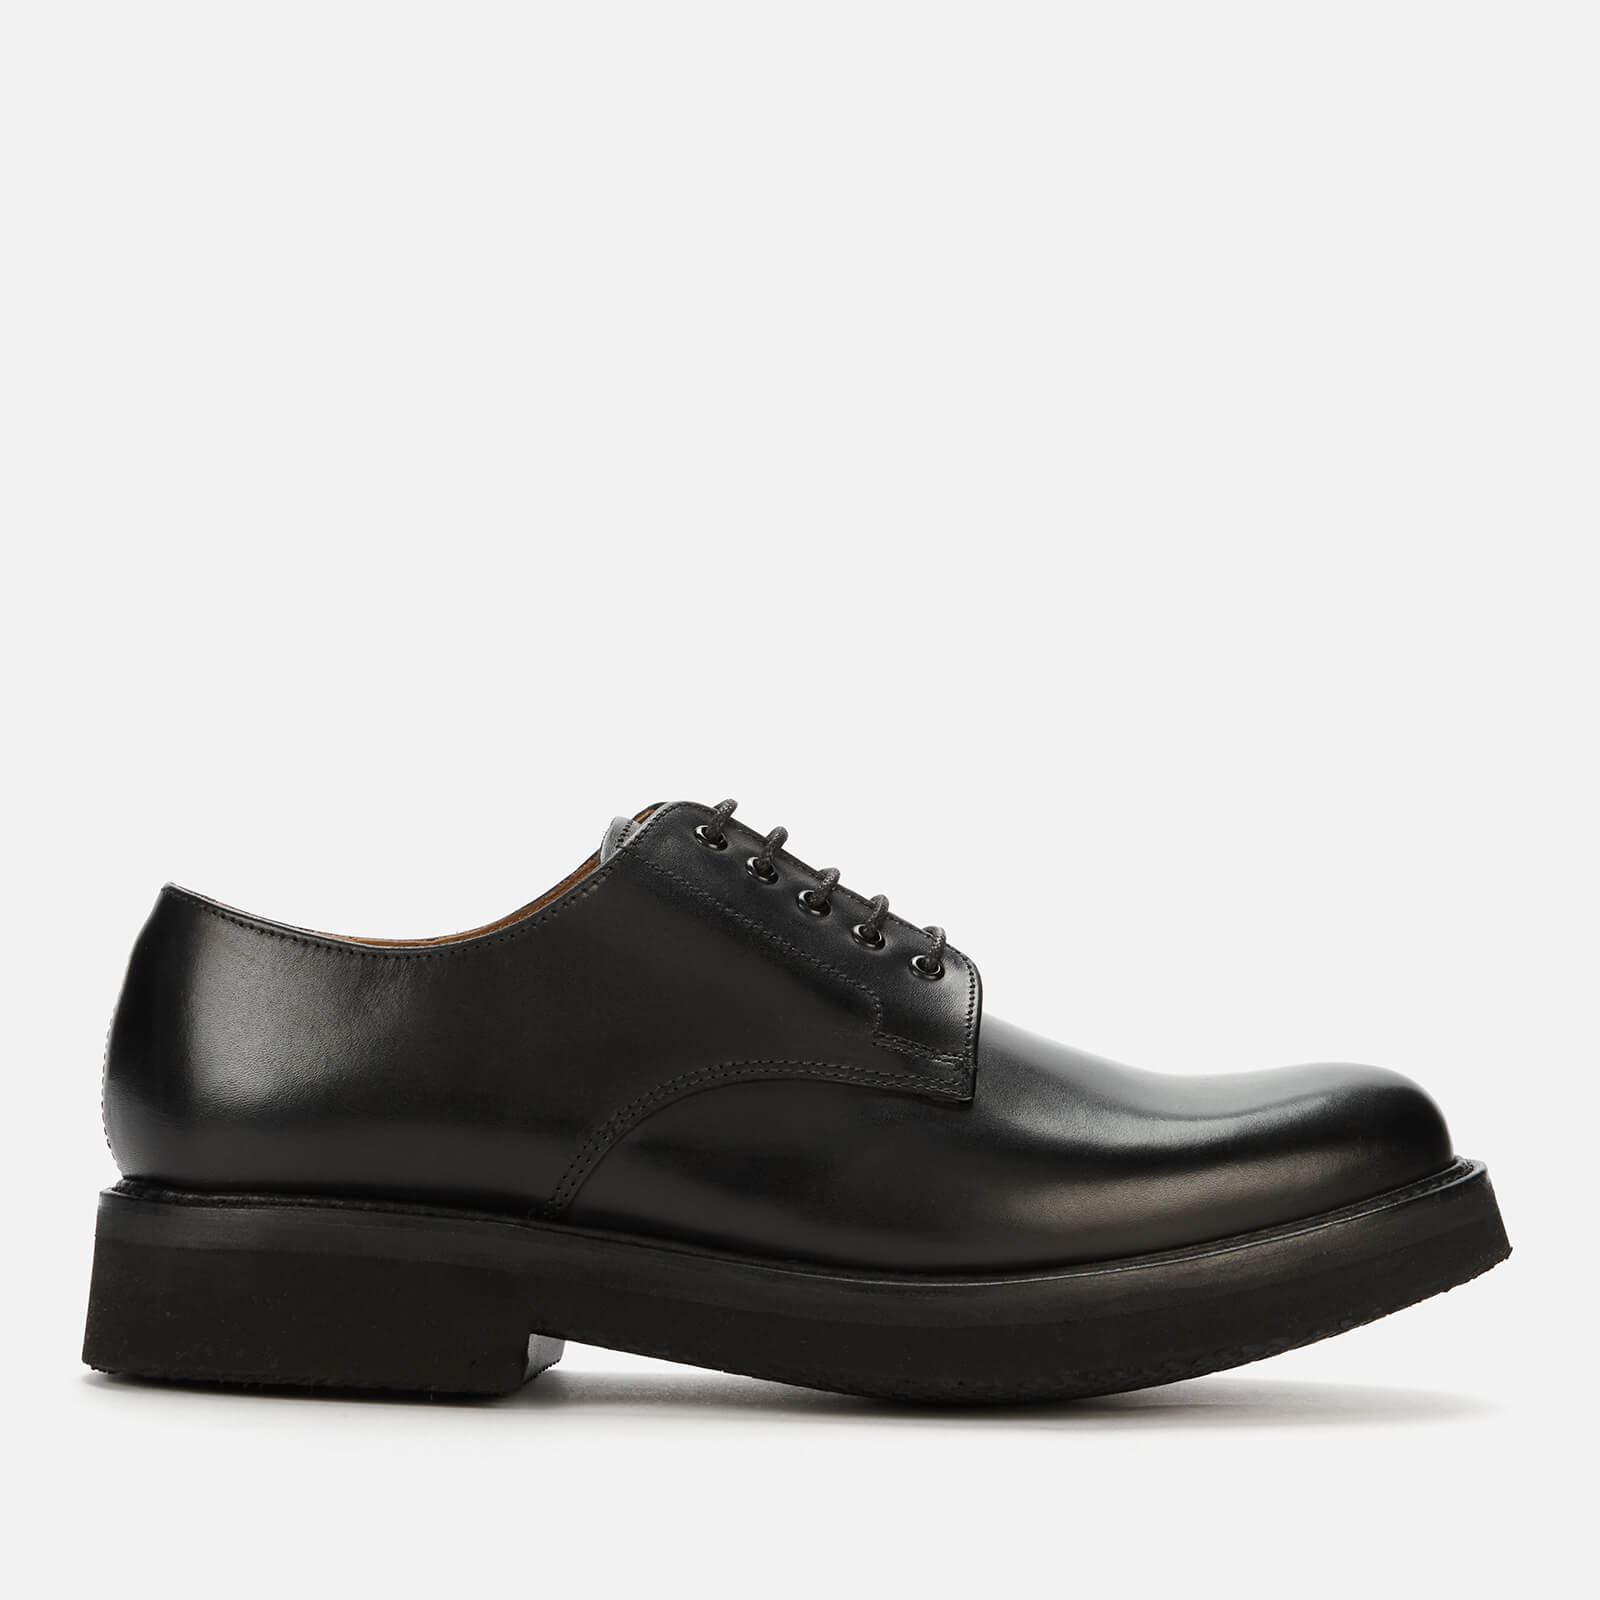 Grenson Men's Curt Leather Derby Shoes - Black - UK 7